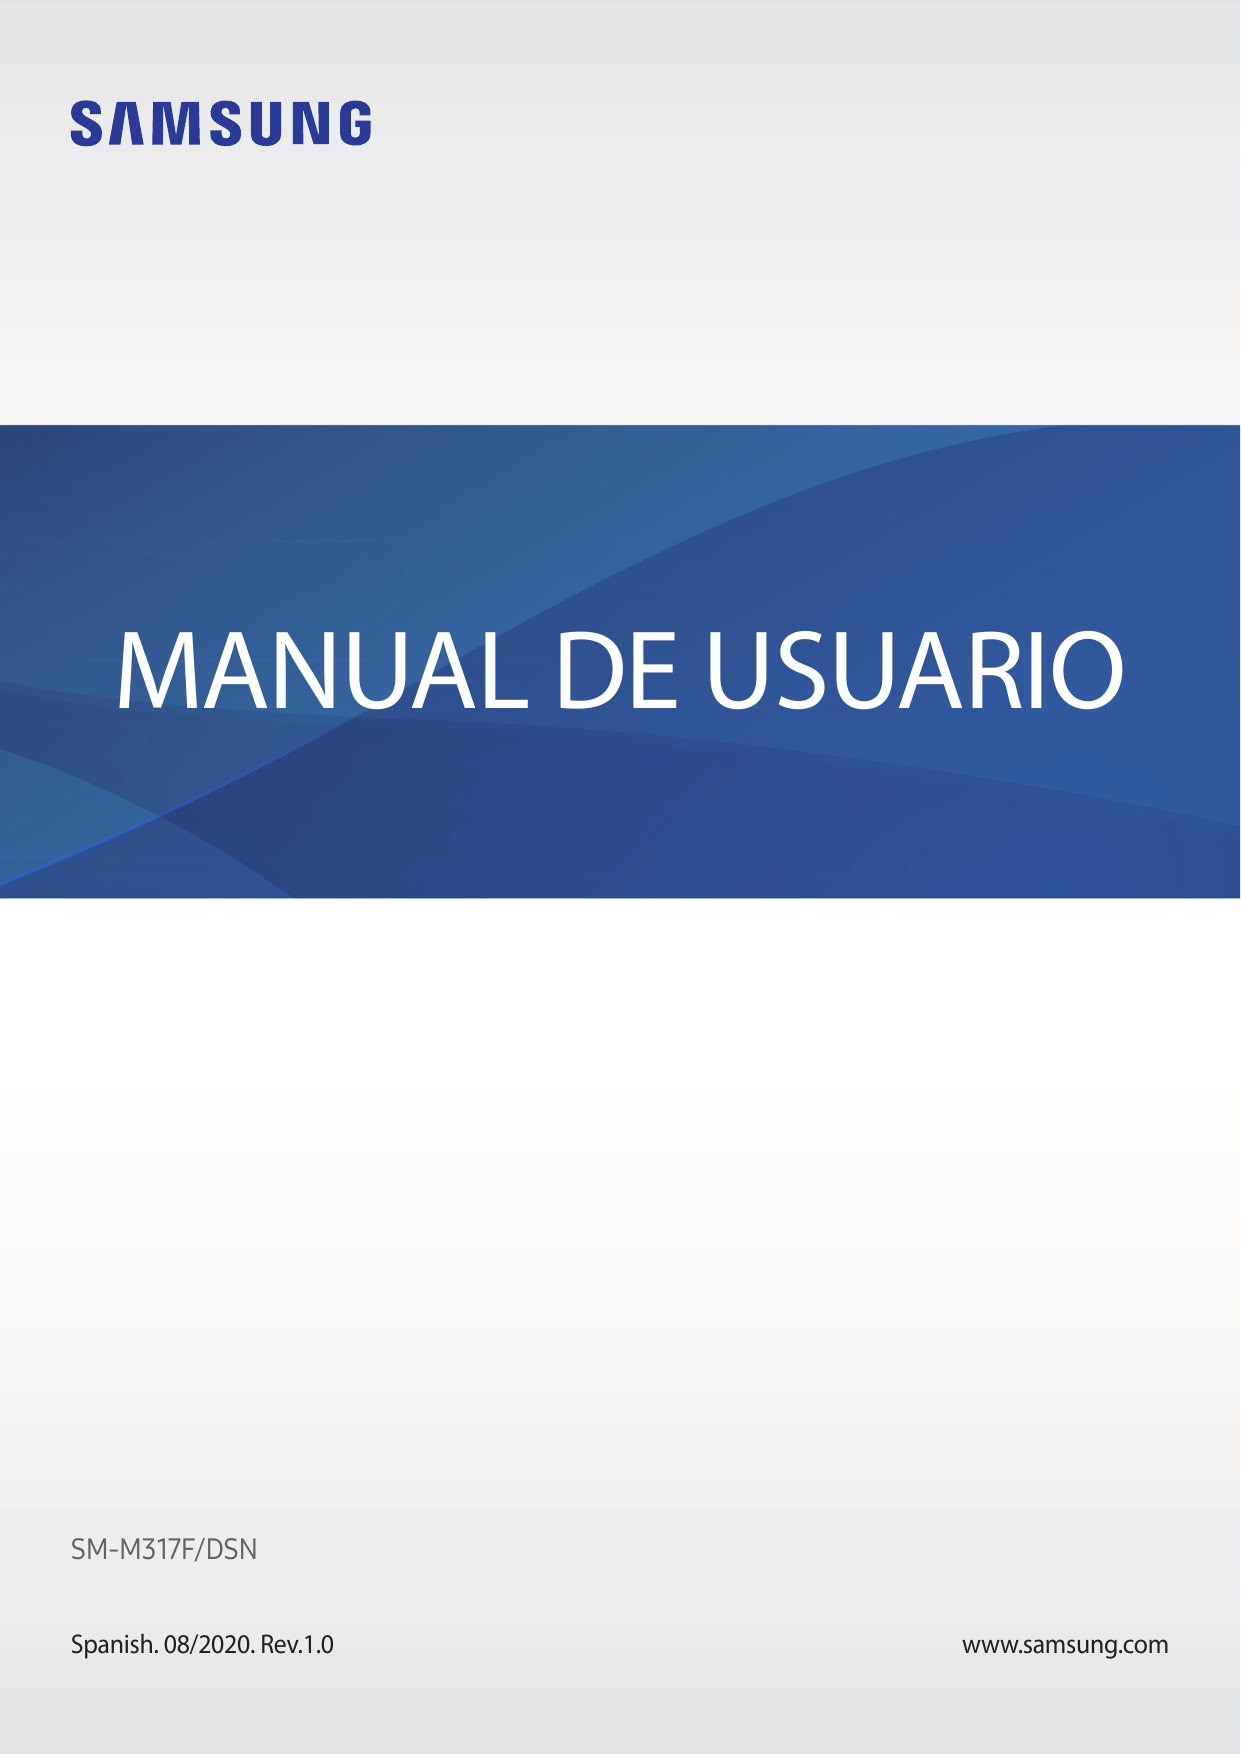 MANUAL DE USUARIOSM-M317F/DSNSpanish. 08/2020. Rev.1.0www.samsung.com